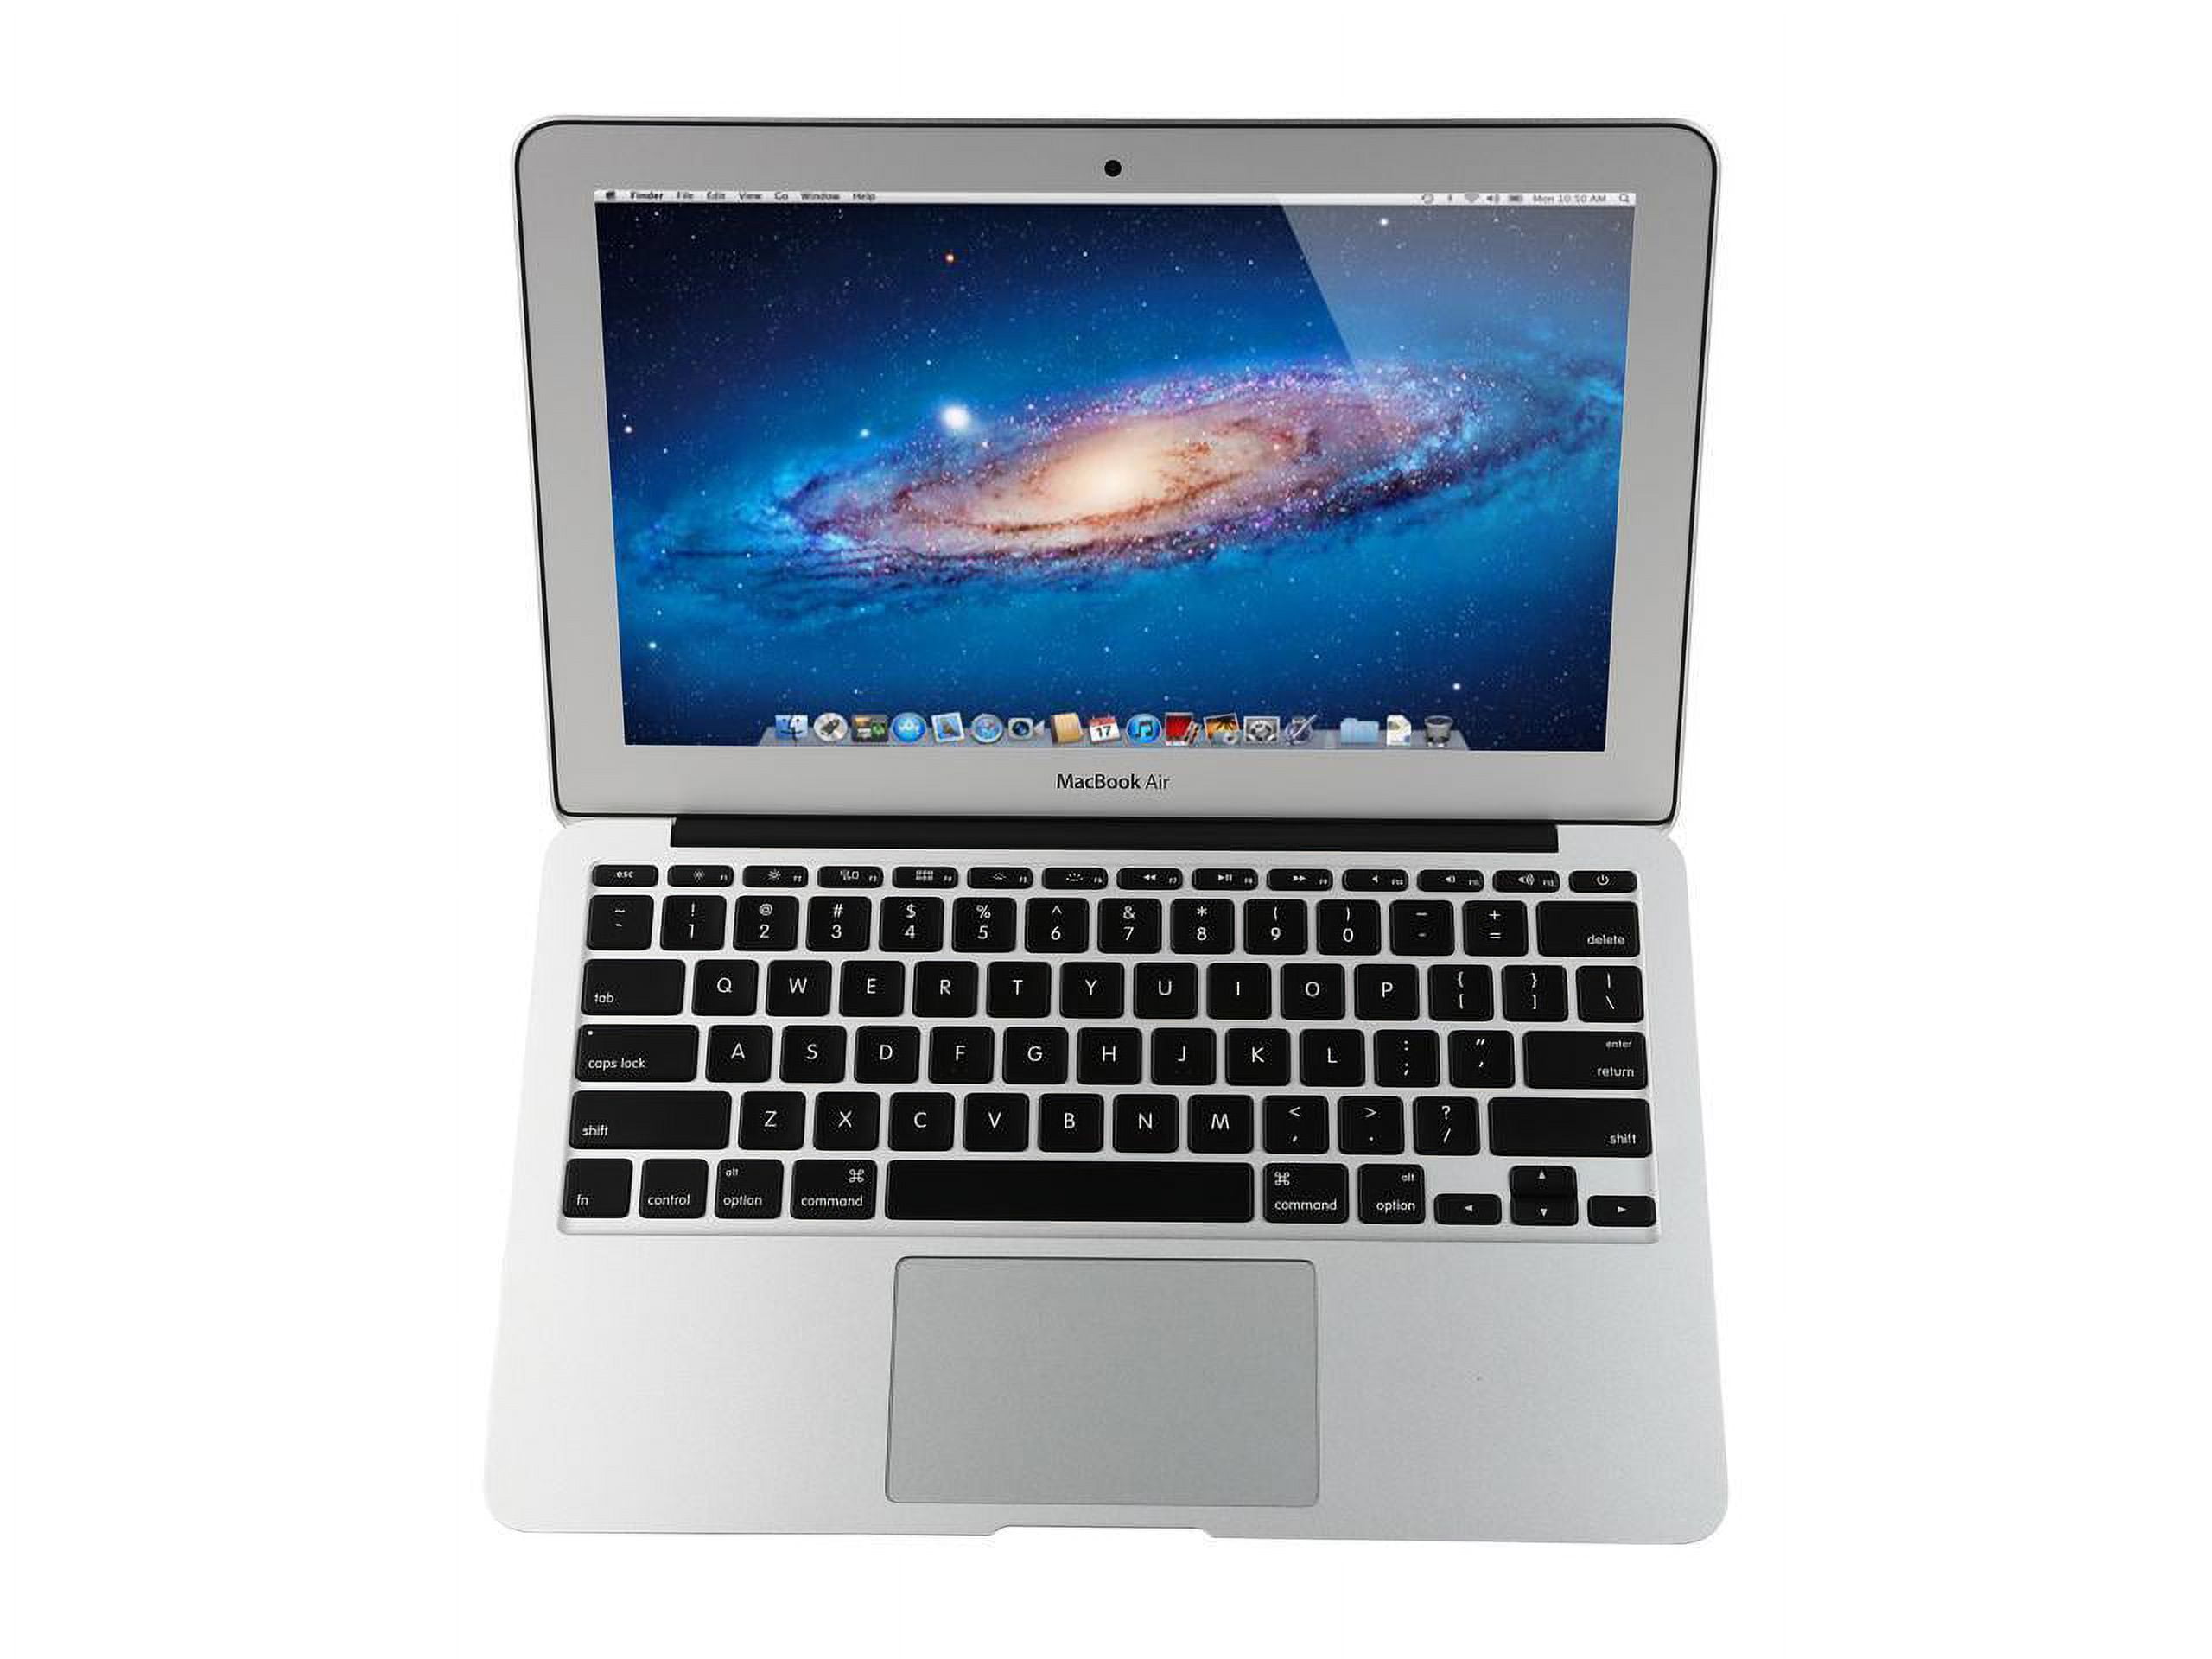 Pre-Owned Apple MacBook Air MD711LL/B Intel Core i5-4260U X2 1.4 